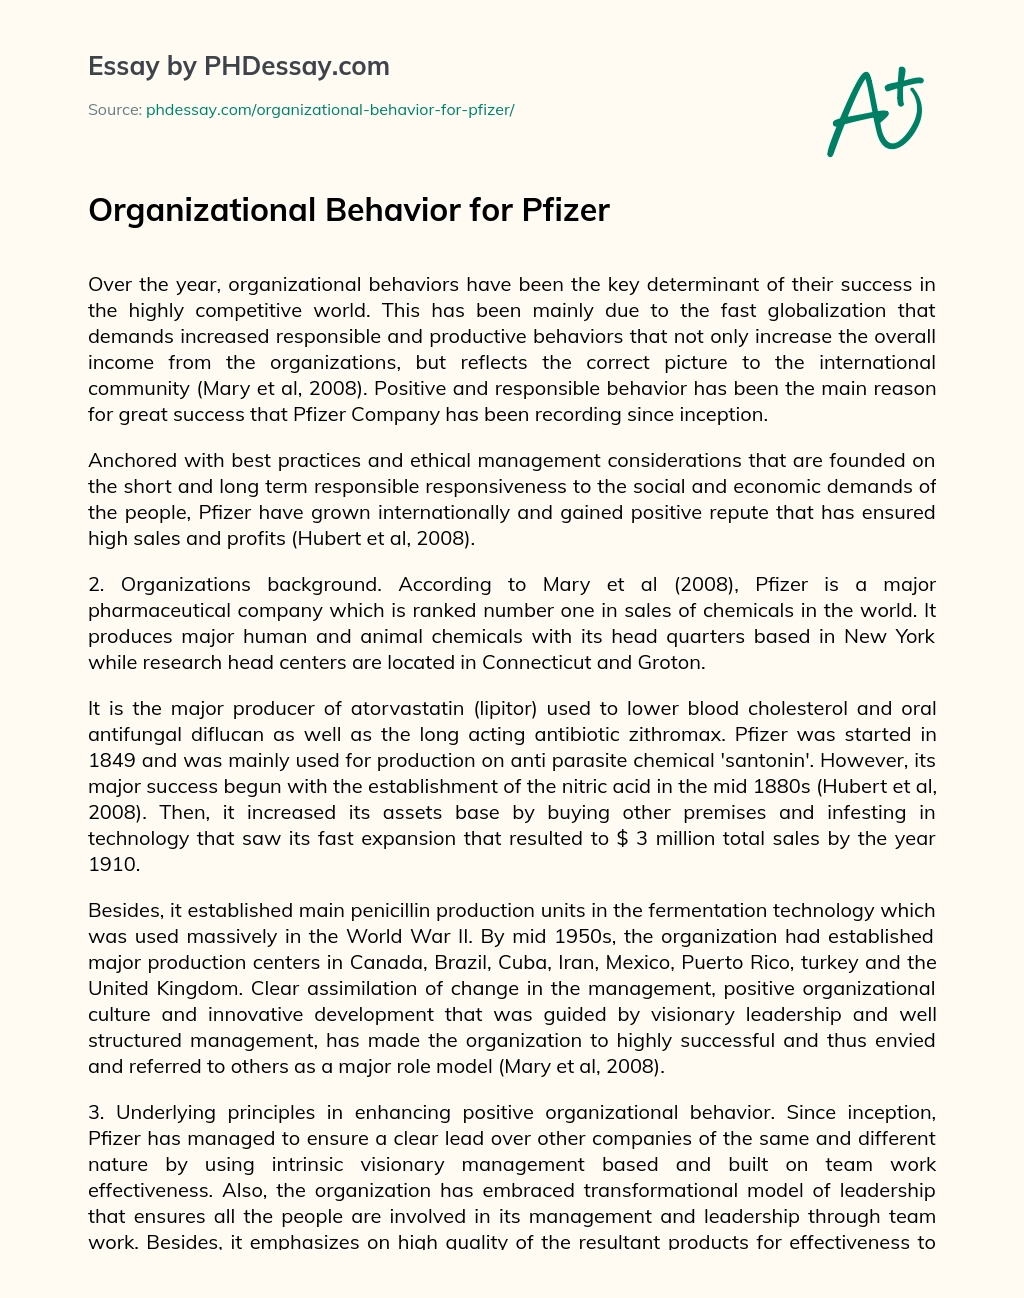 Organizational Behavior for Pfizer essay